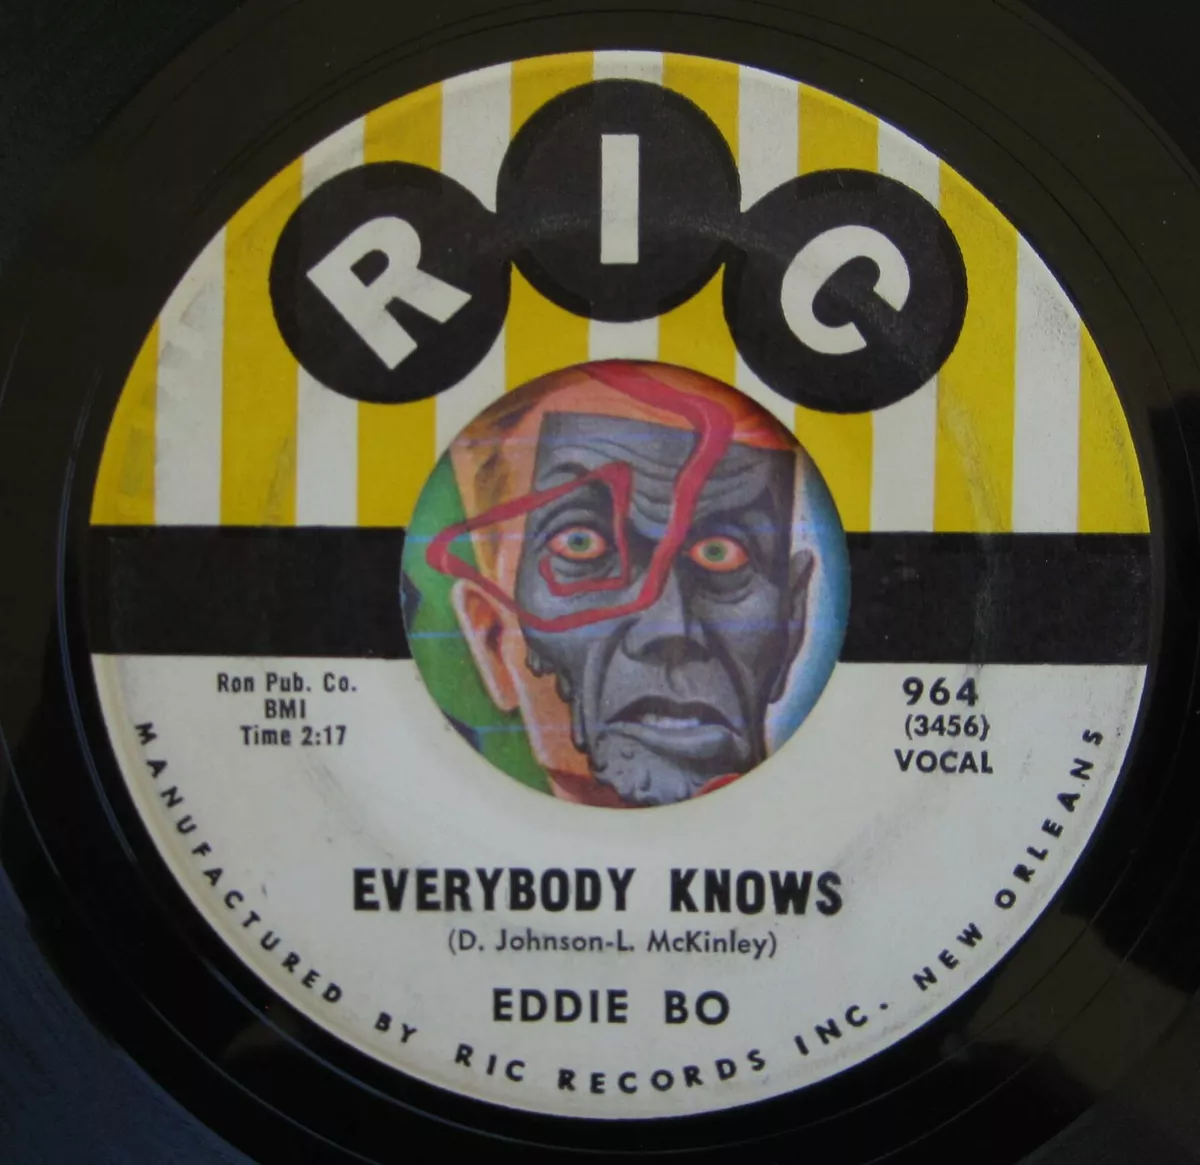 HEAR Eddie Bo 45 Everybody Knows / Got Your Mojo Working RIC 964 R&B soul  nola